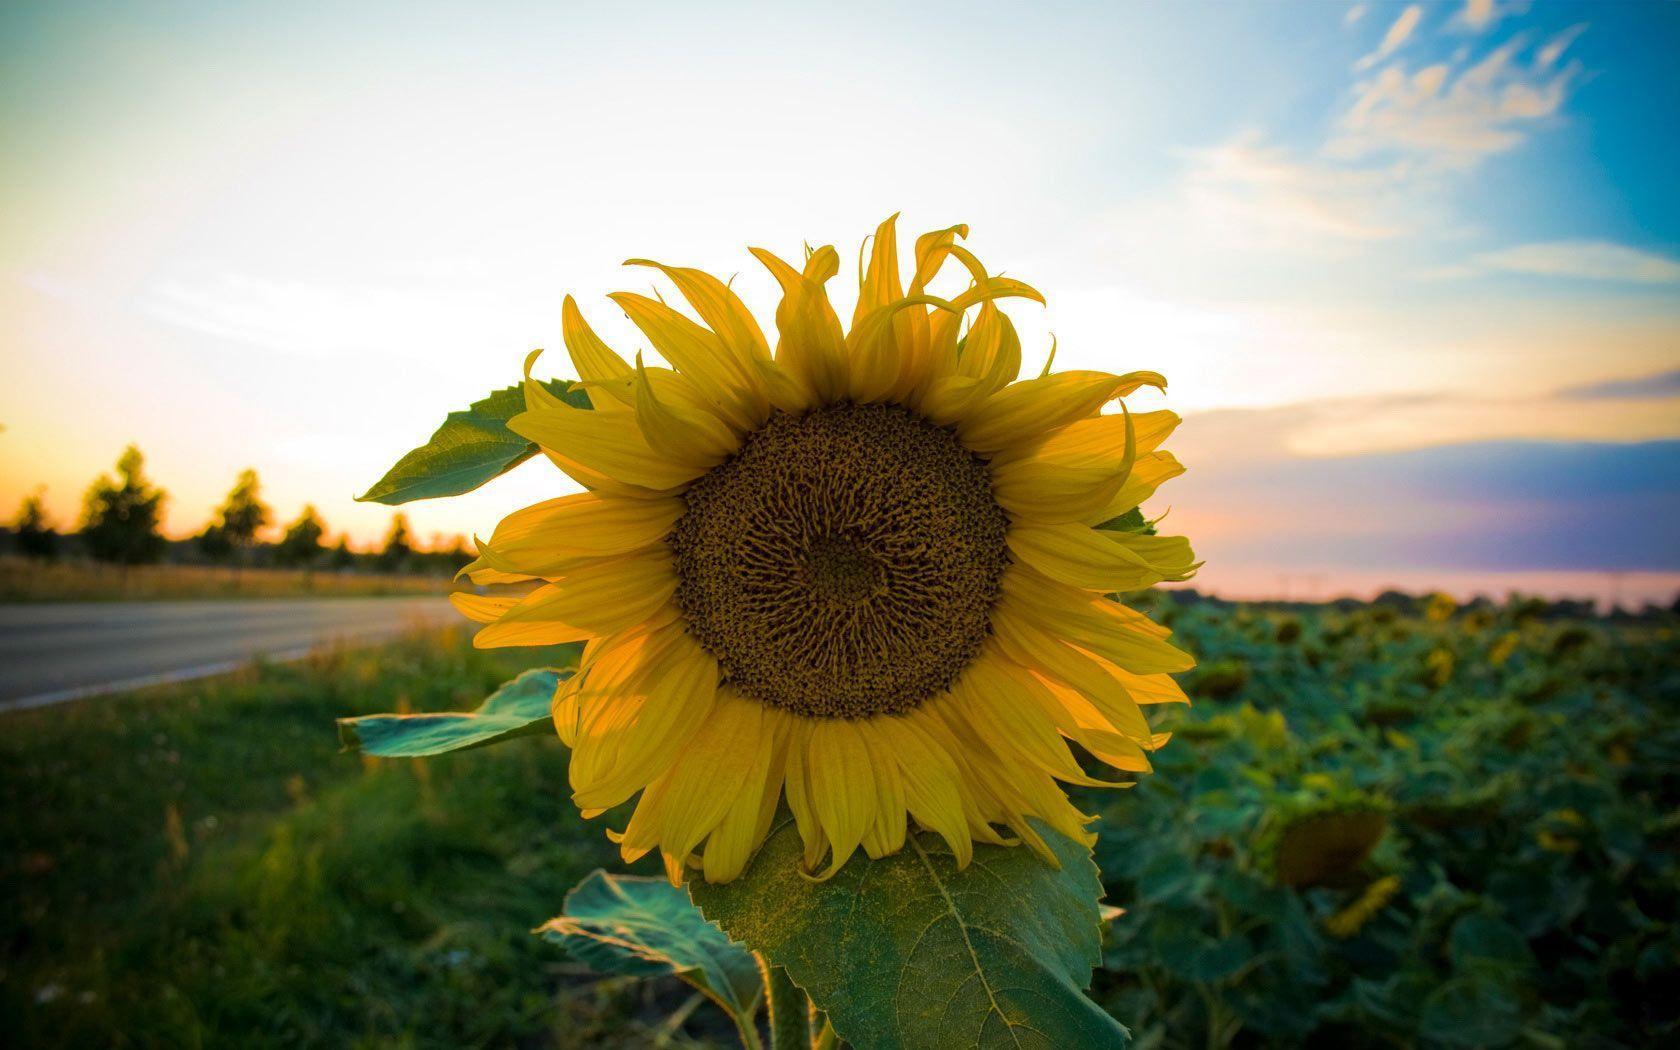 Desktop Wallpaper · Gallery · Nature · Growing sunflower. Free